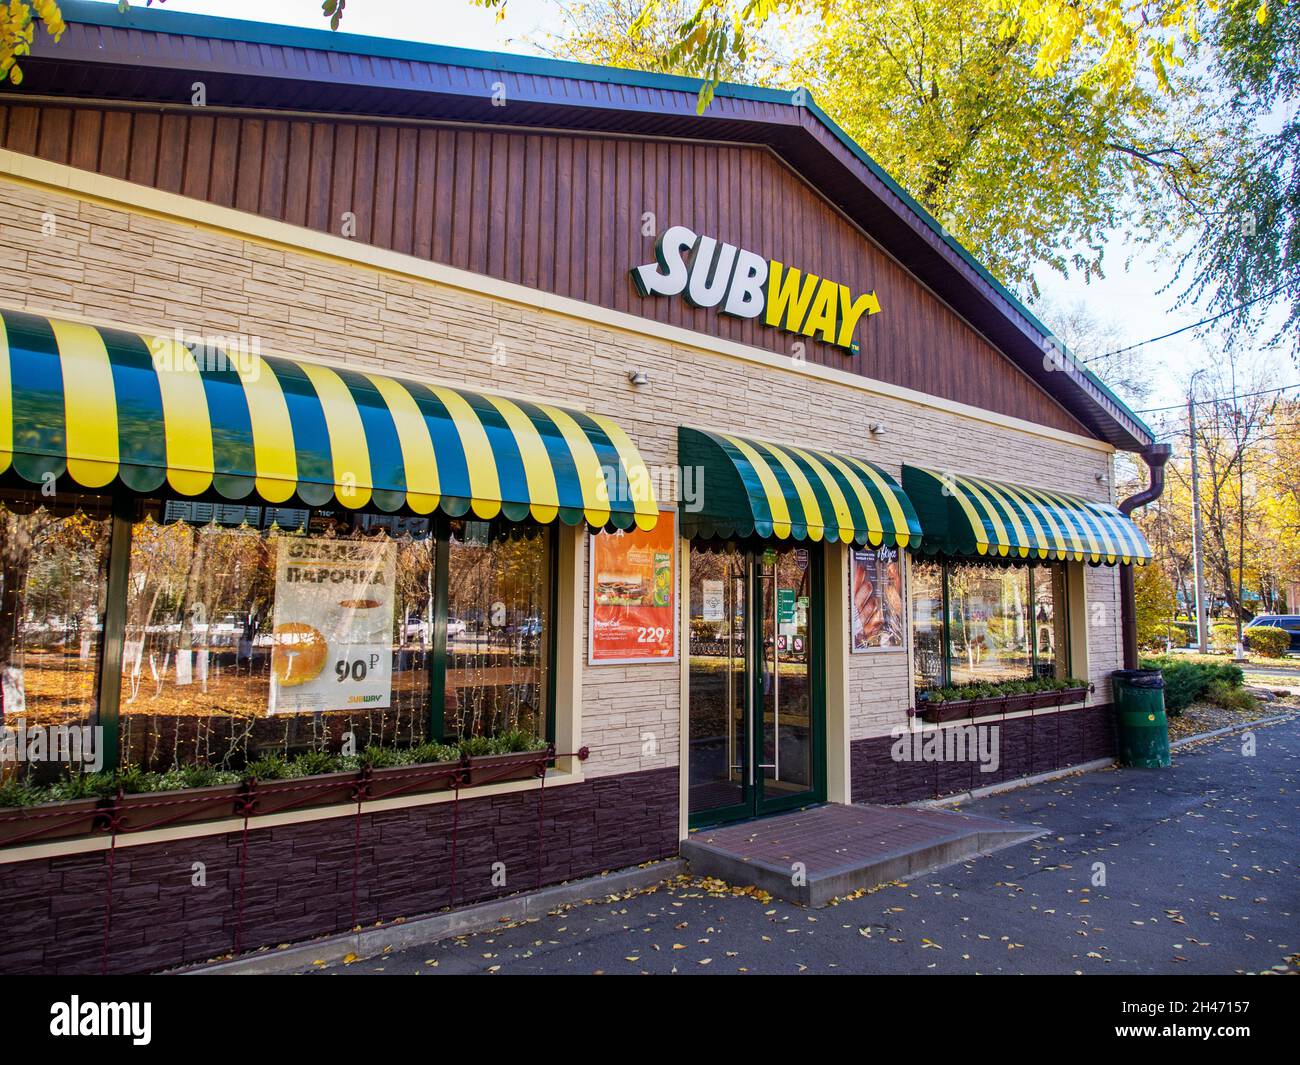 Subway fast food restaurant Stock Photo